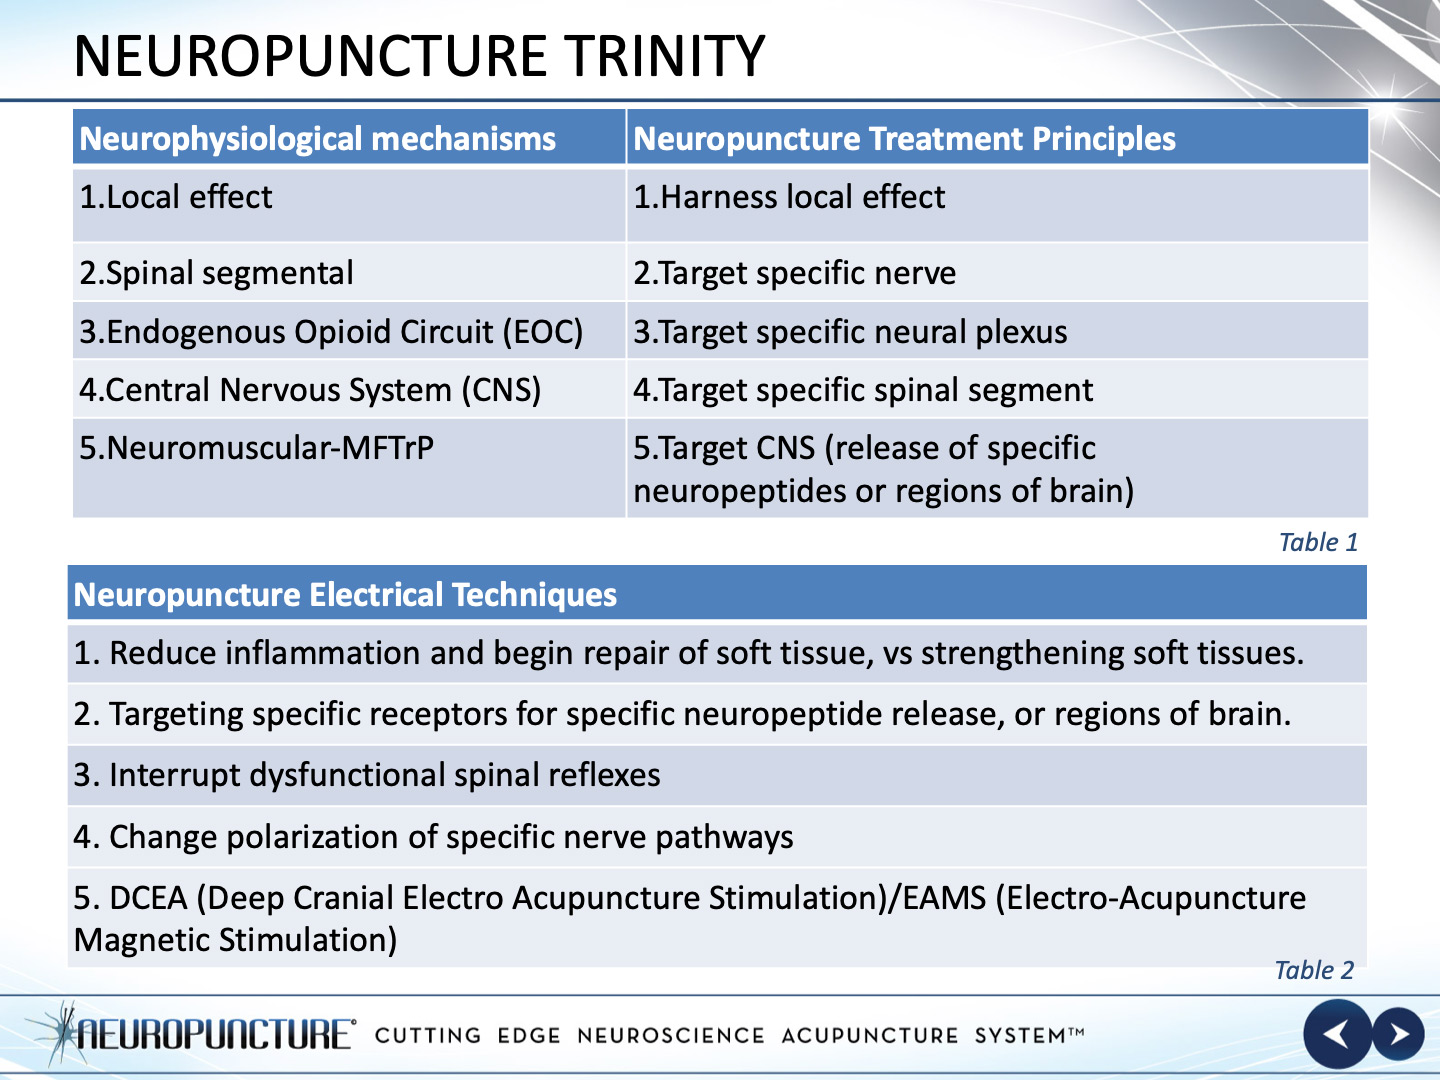 The Neuropuncture Trinity